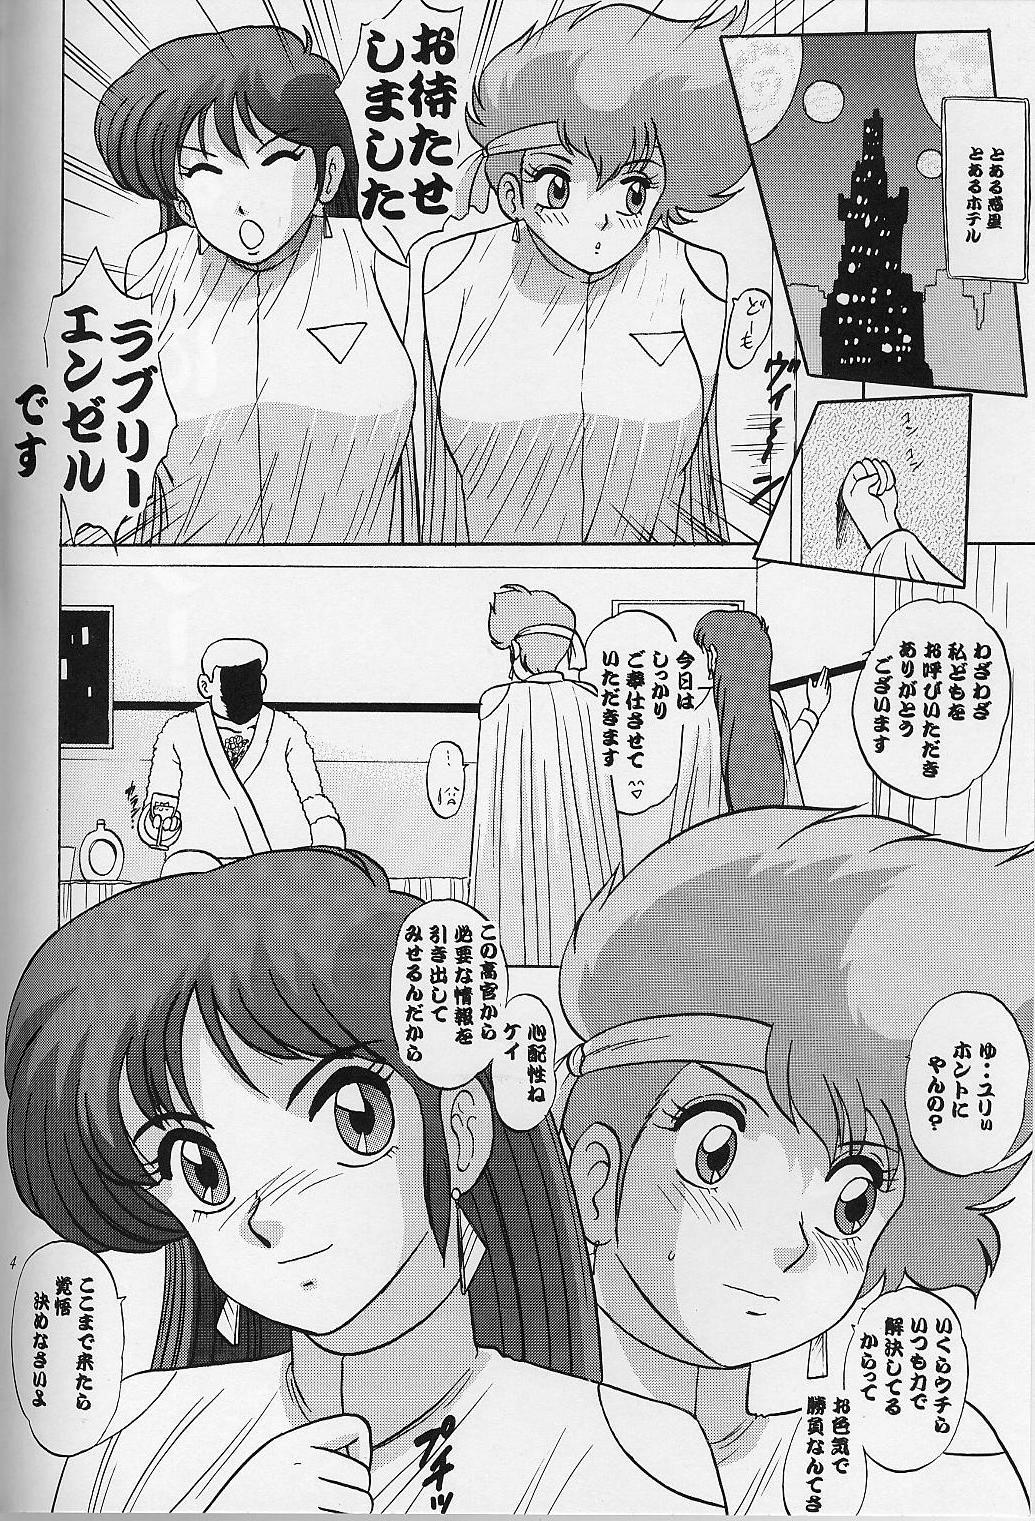 Bedroom Tenshi no Himitsu - Dirty pair Lezbi - Page 3